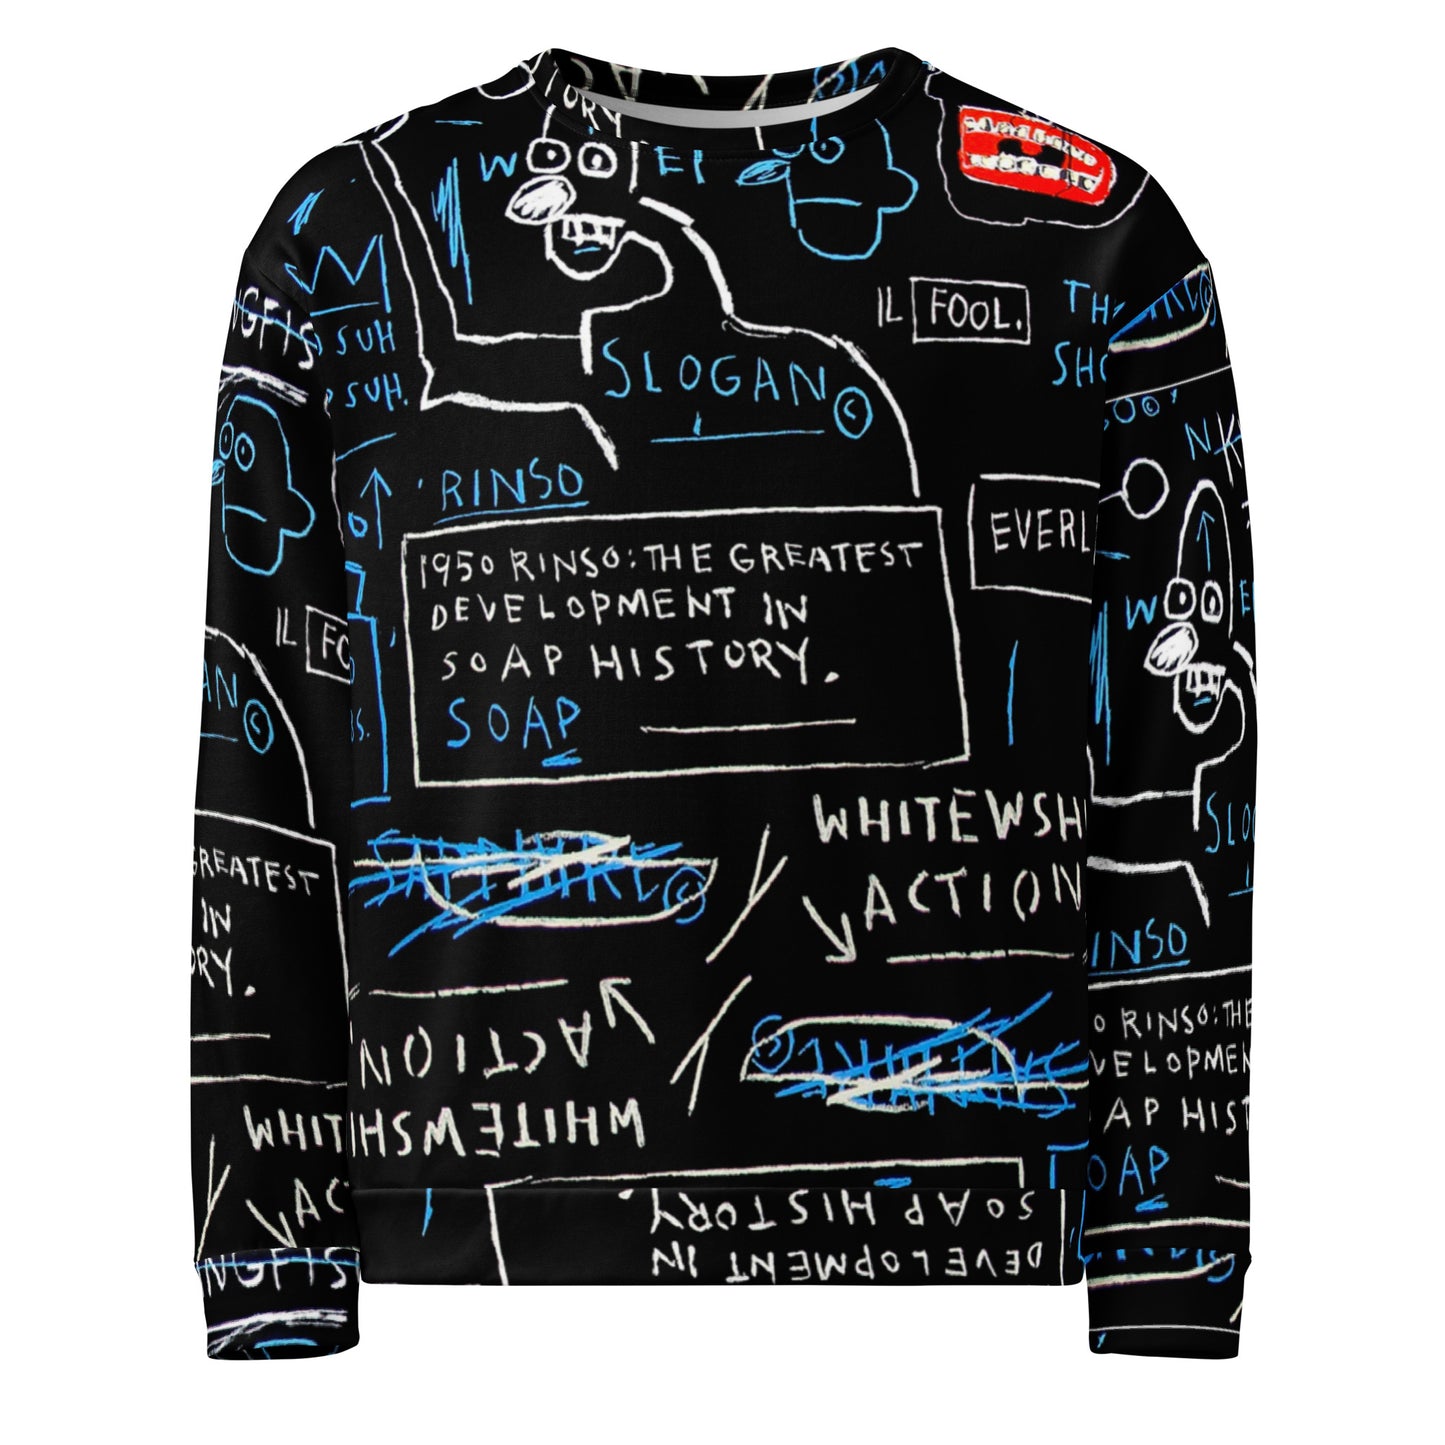 Jean-Michel Basquiat "Rinso" Artwork Printed Crewneck Sweatshirt